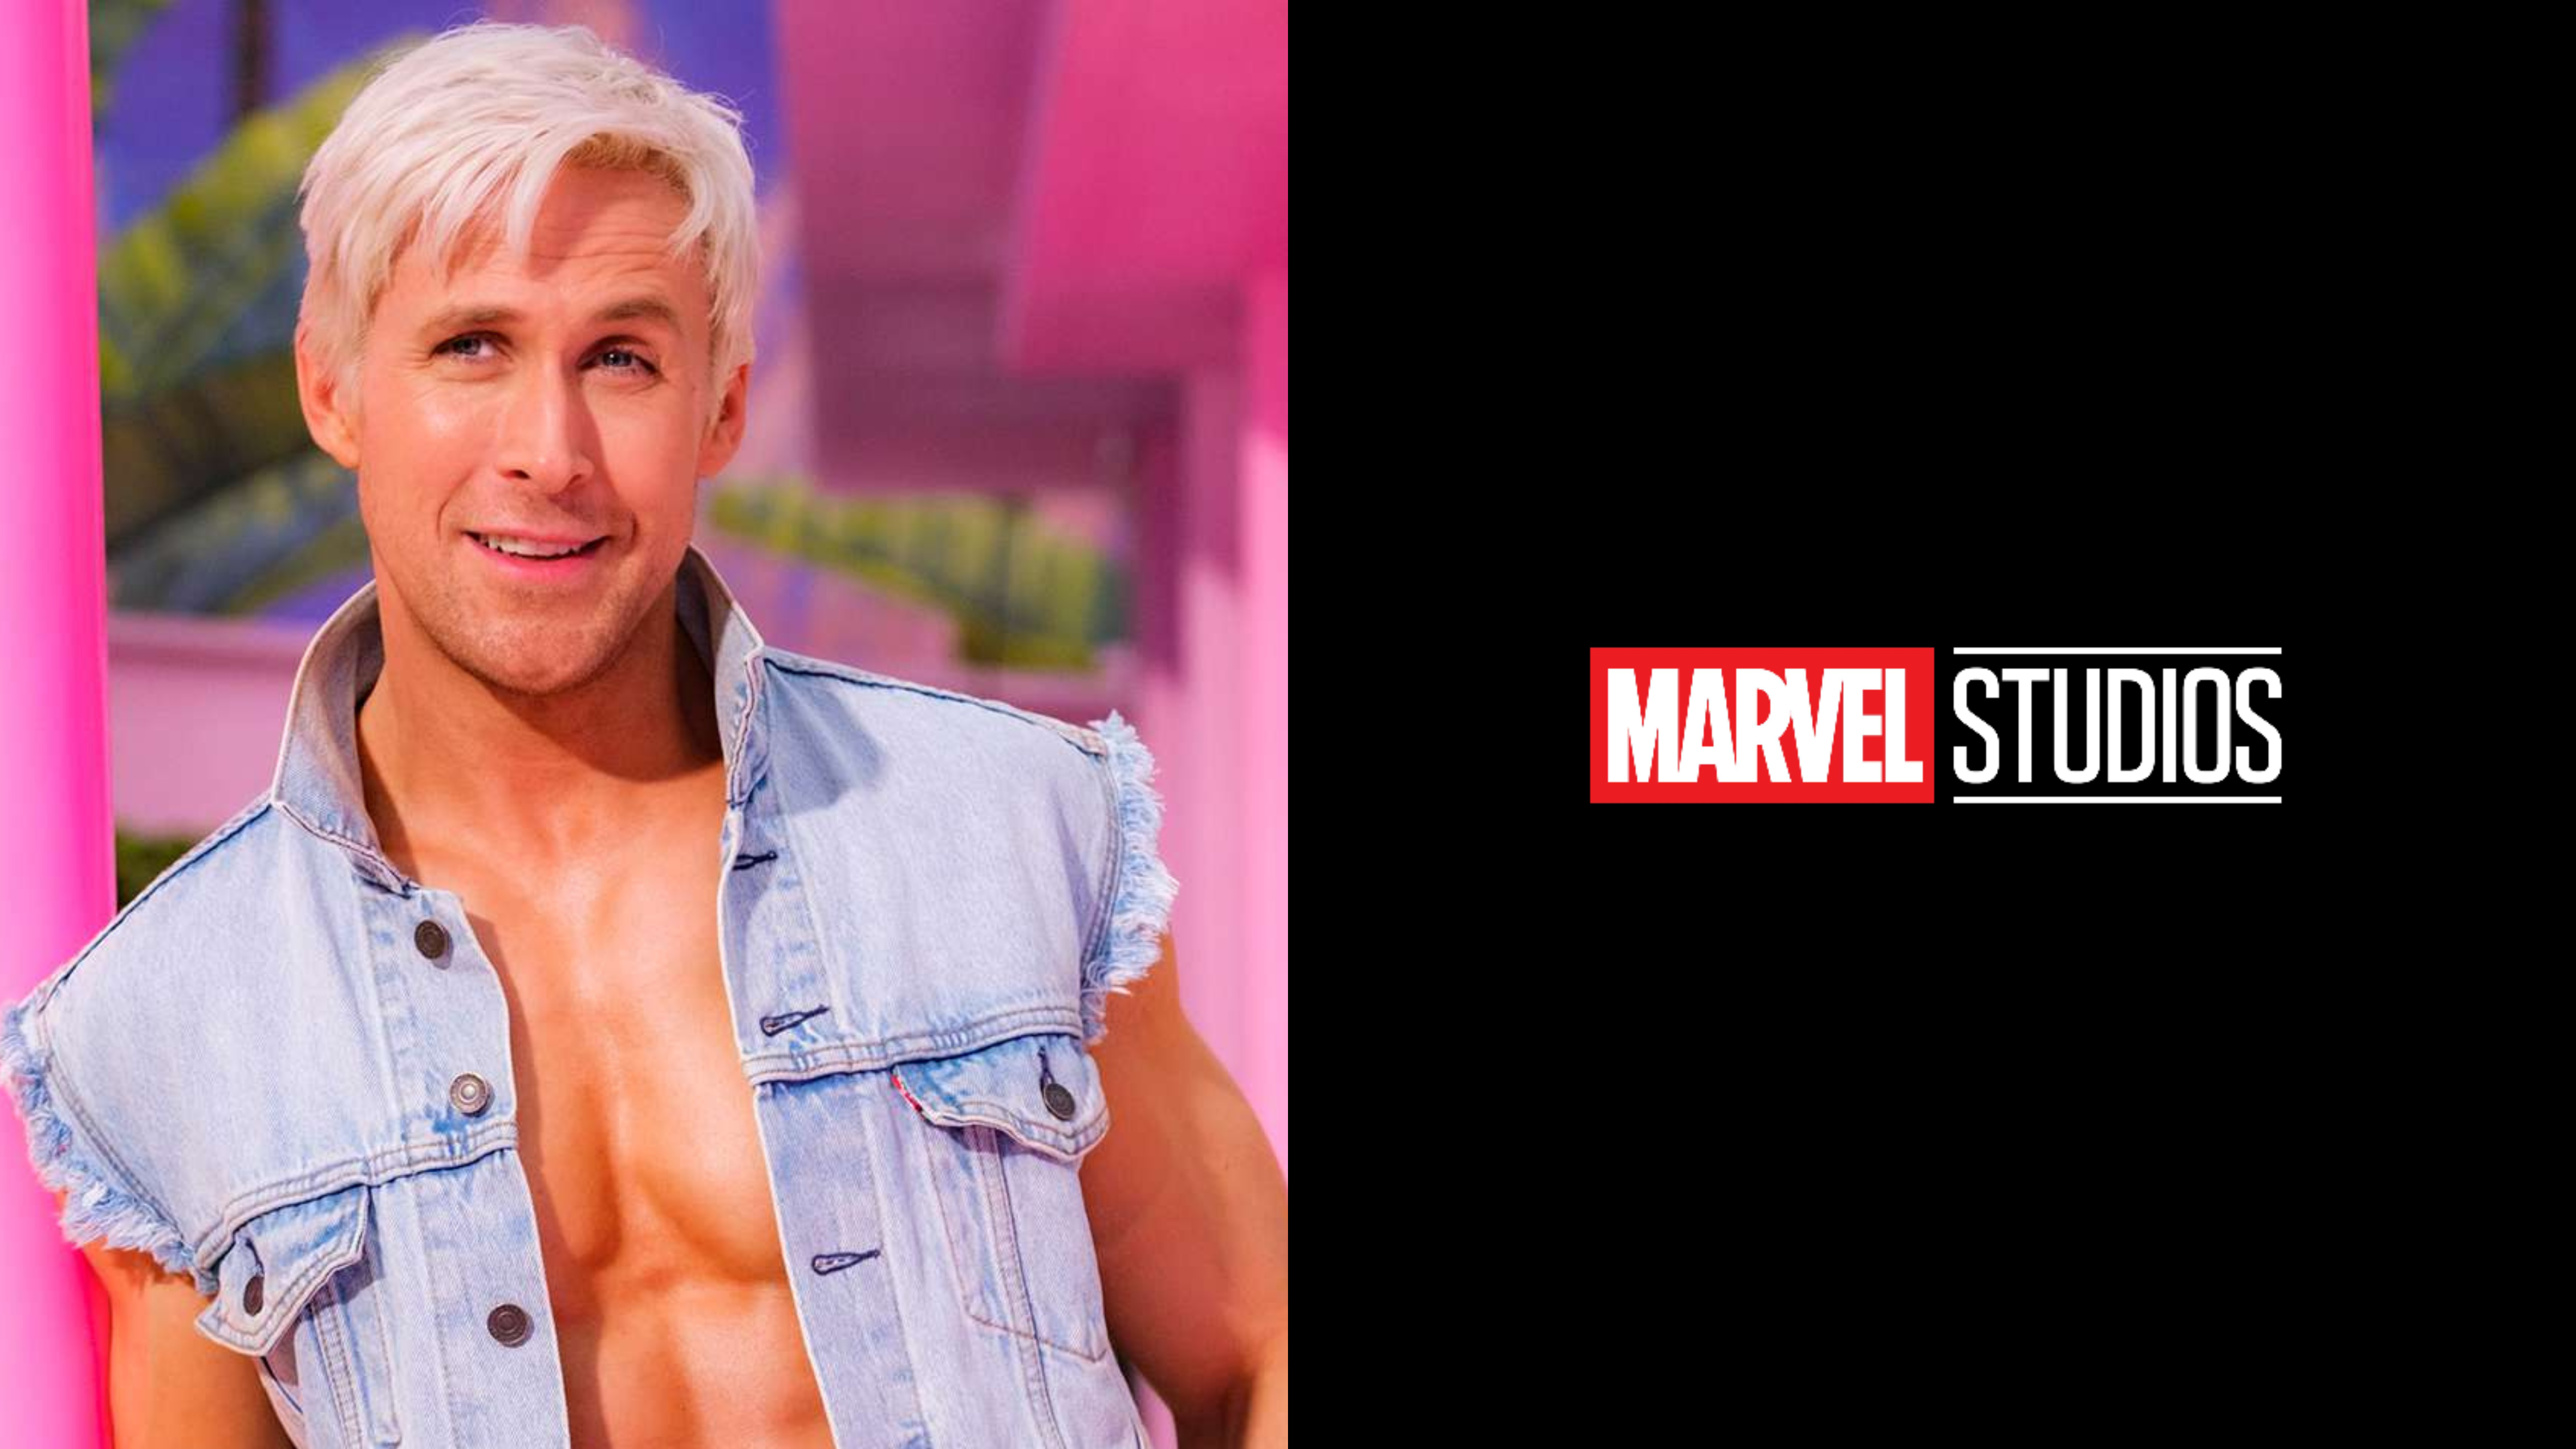 Image of Ryan Gosling from 'BARBIE' Movie and Marvel Studios Logo.